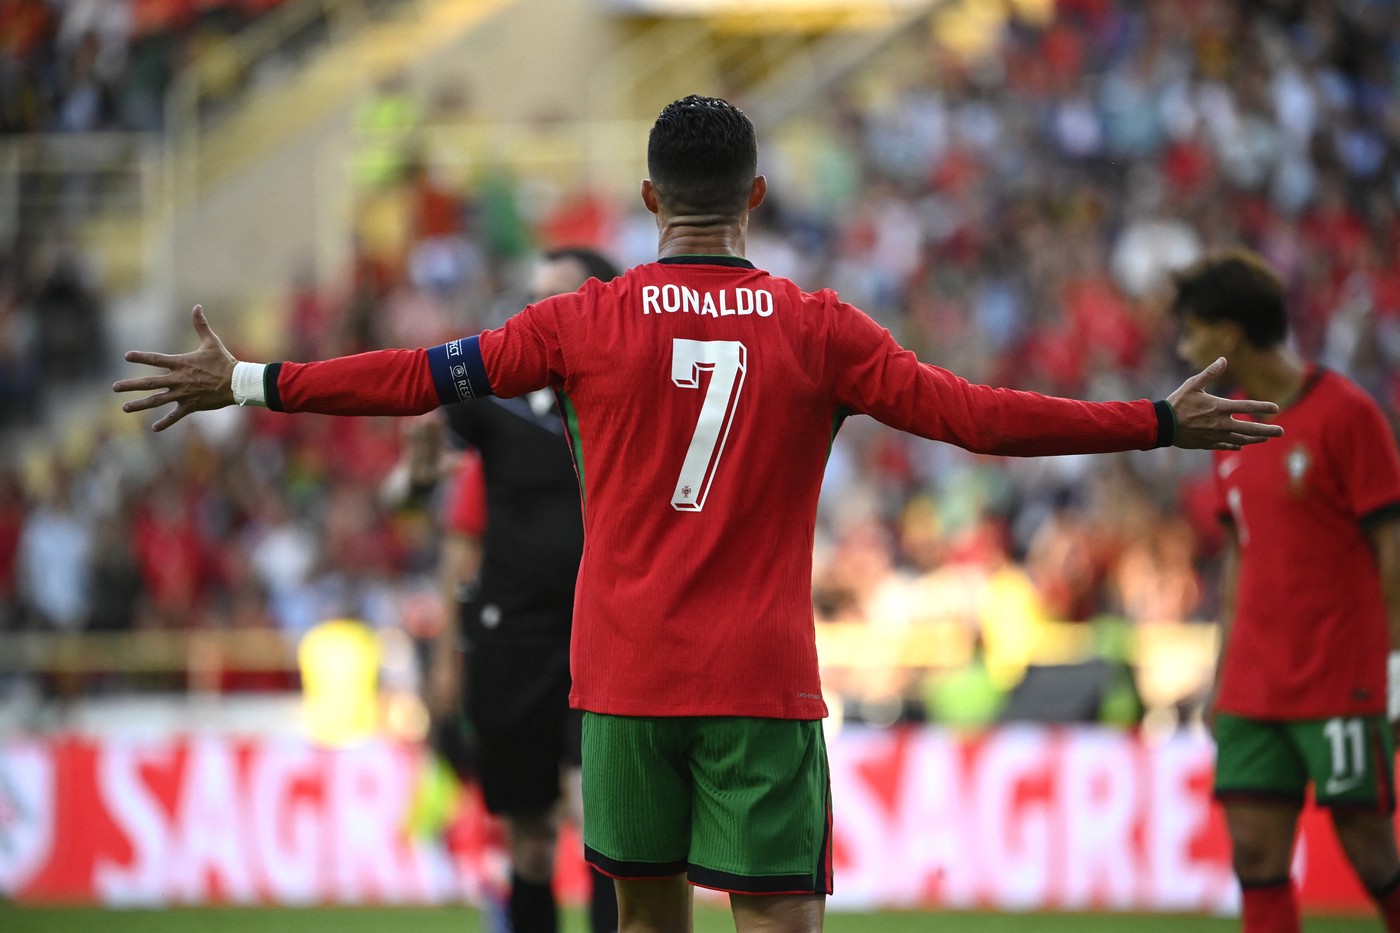 Portugalia - Irlanda 3-0, ACUM, DGS 1. Cristiano Ronaldo a reușit ”dubla” / Moldova - Ucraina 0-4